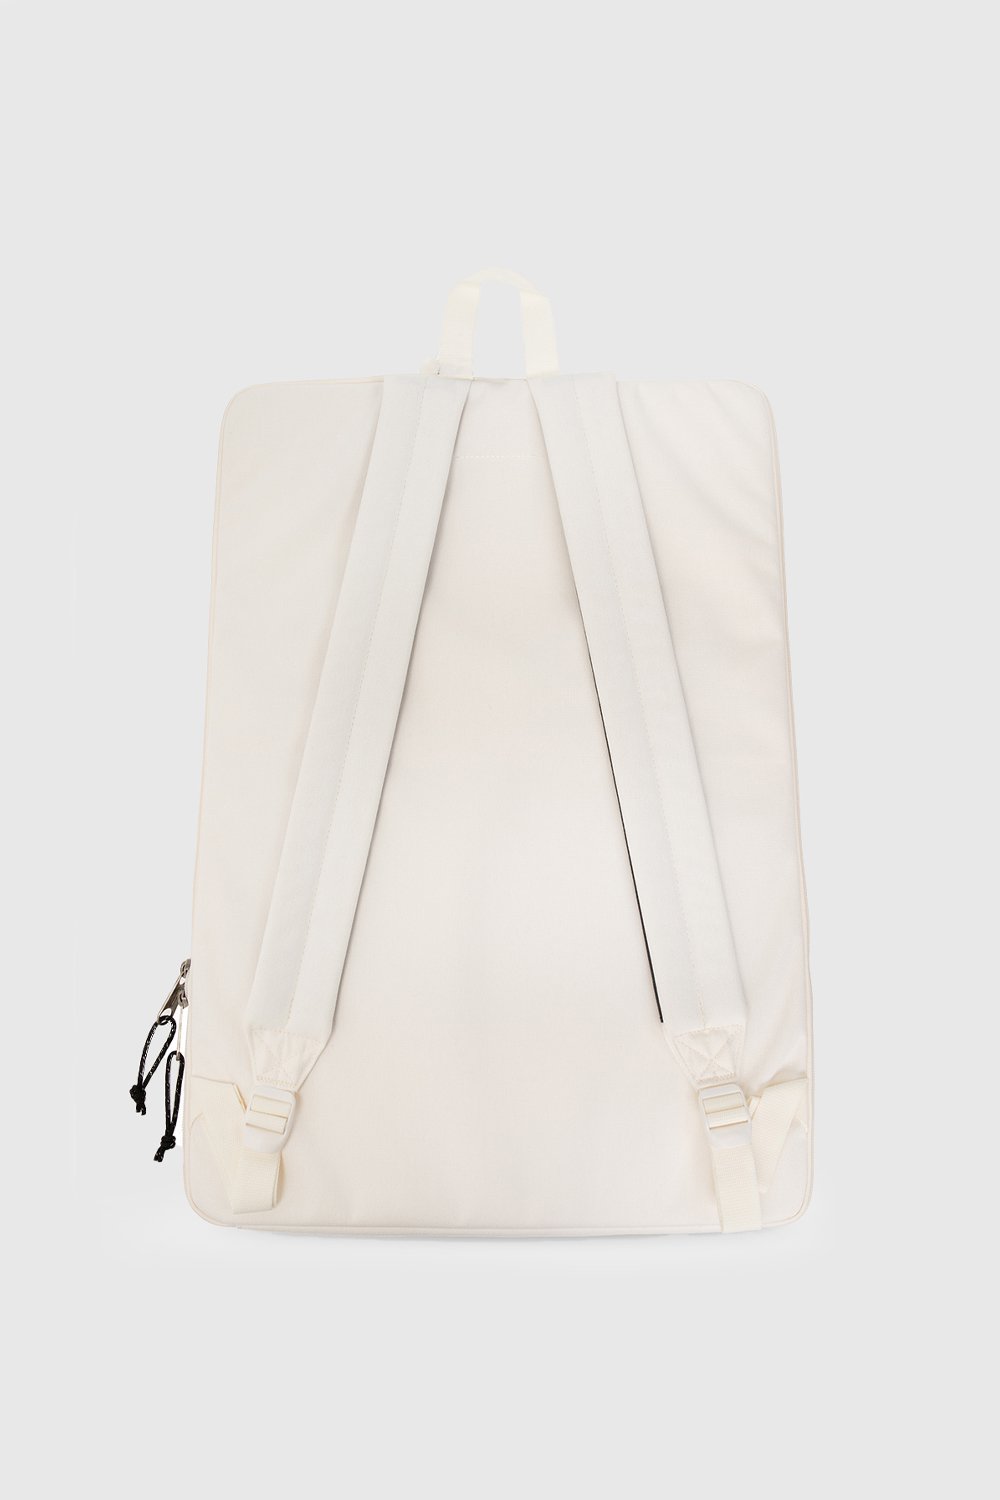 MM6 Maison Margiela x Eastpak - Zaino Backpack Whisper White - Accessories - White - Image 3